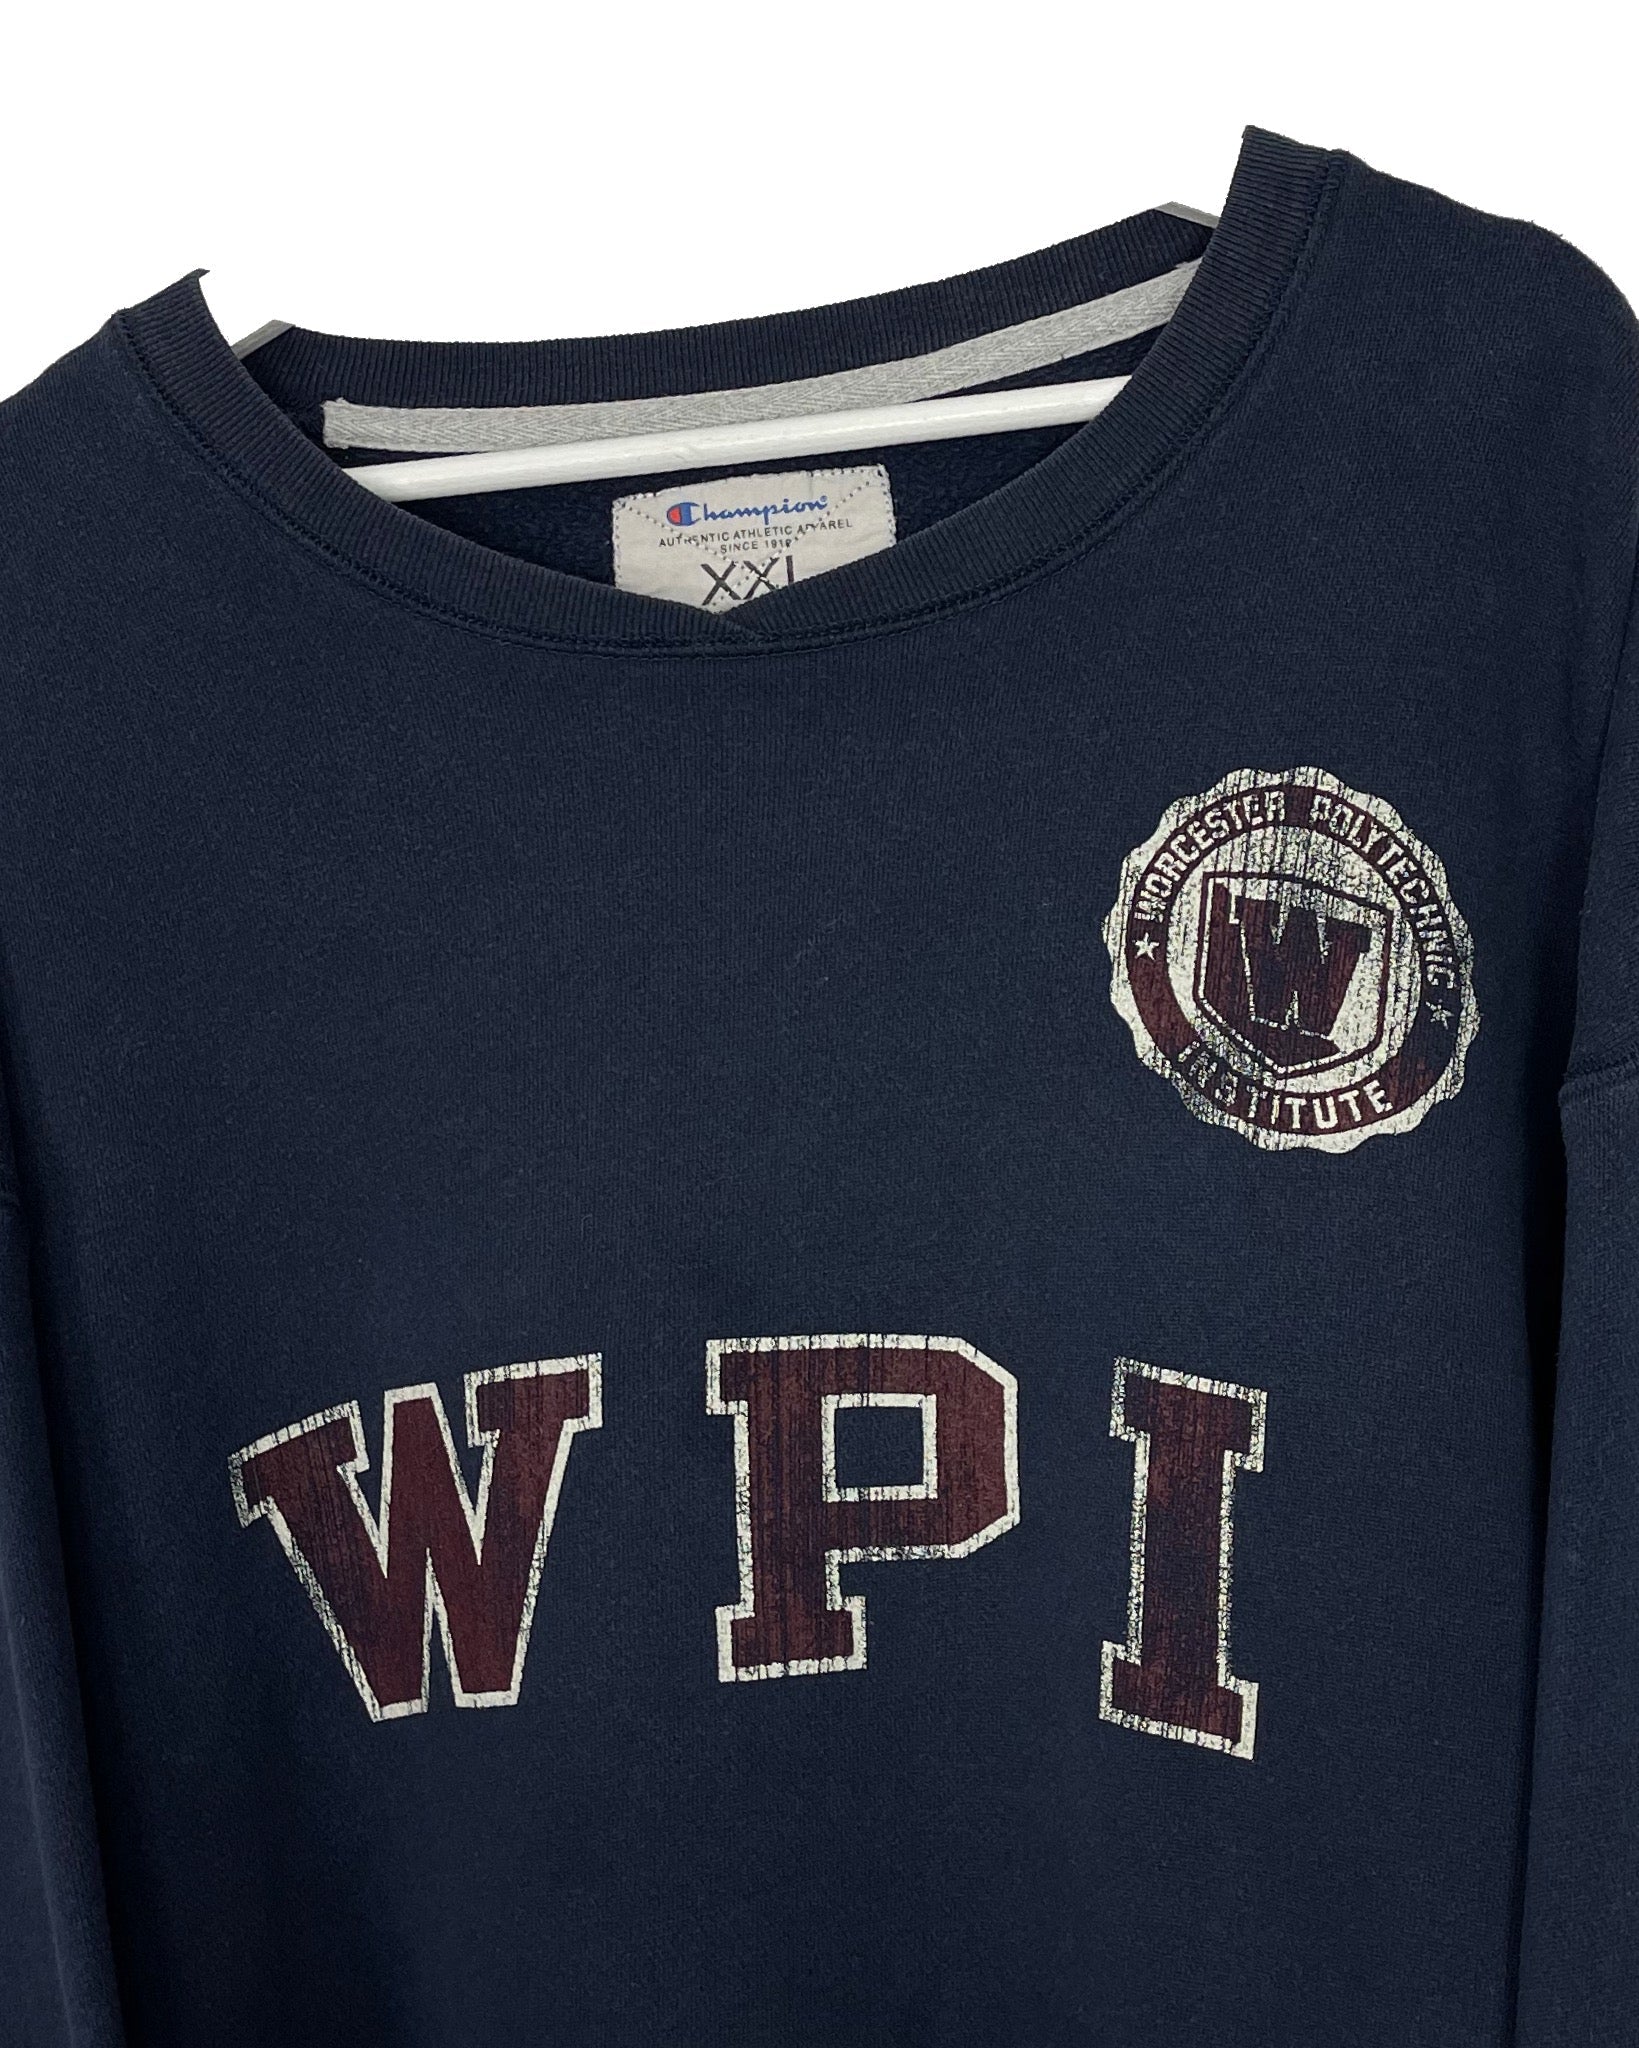  Sweatshirt Champion Sweat - Worcester Polytechnic Institute - XXL - PLOMOSTORE